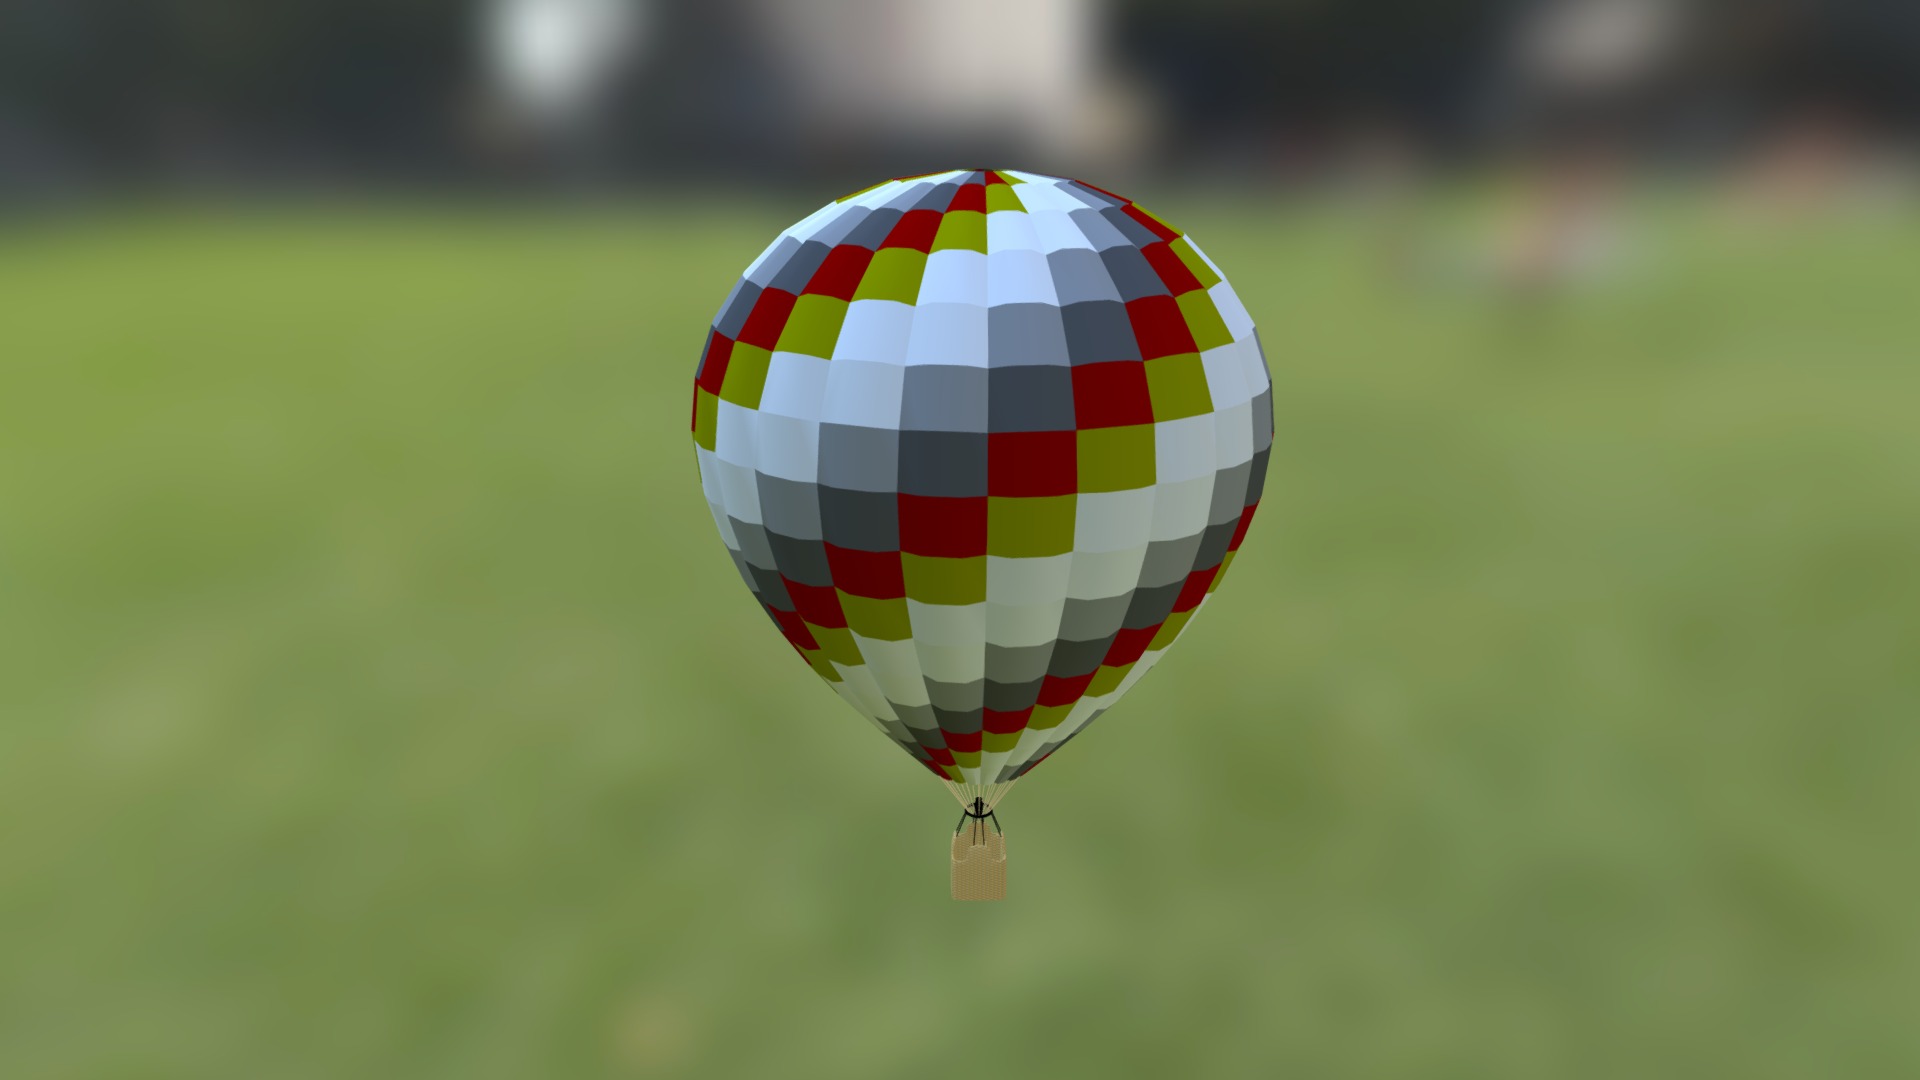 3D model Hot Air Balloon1 - This is a 3D model of the Hot Air Balloon1. The 3D model is about a colorful hot air balloon.